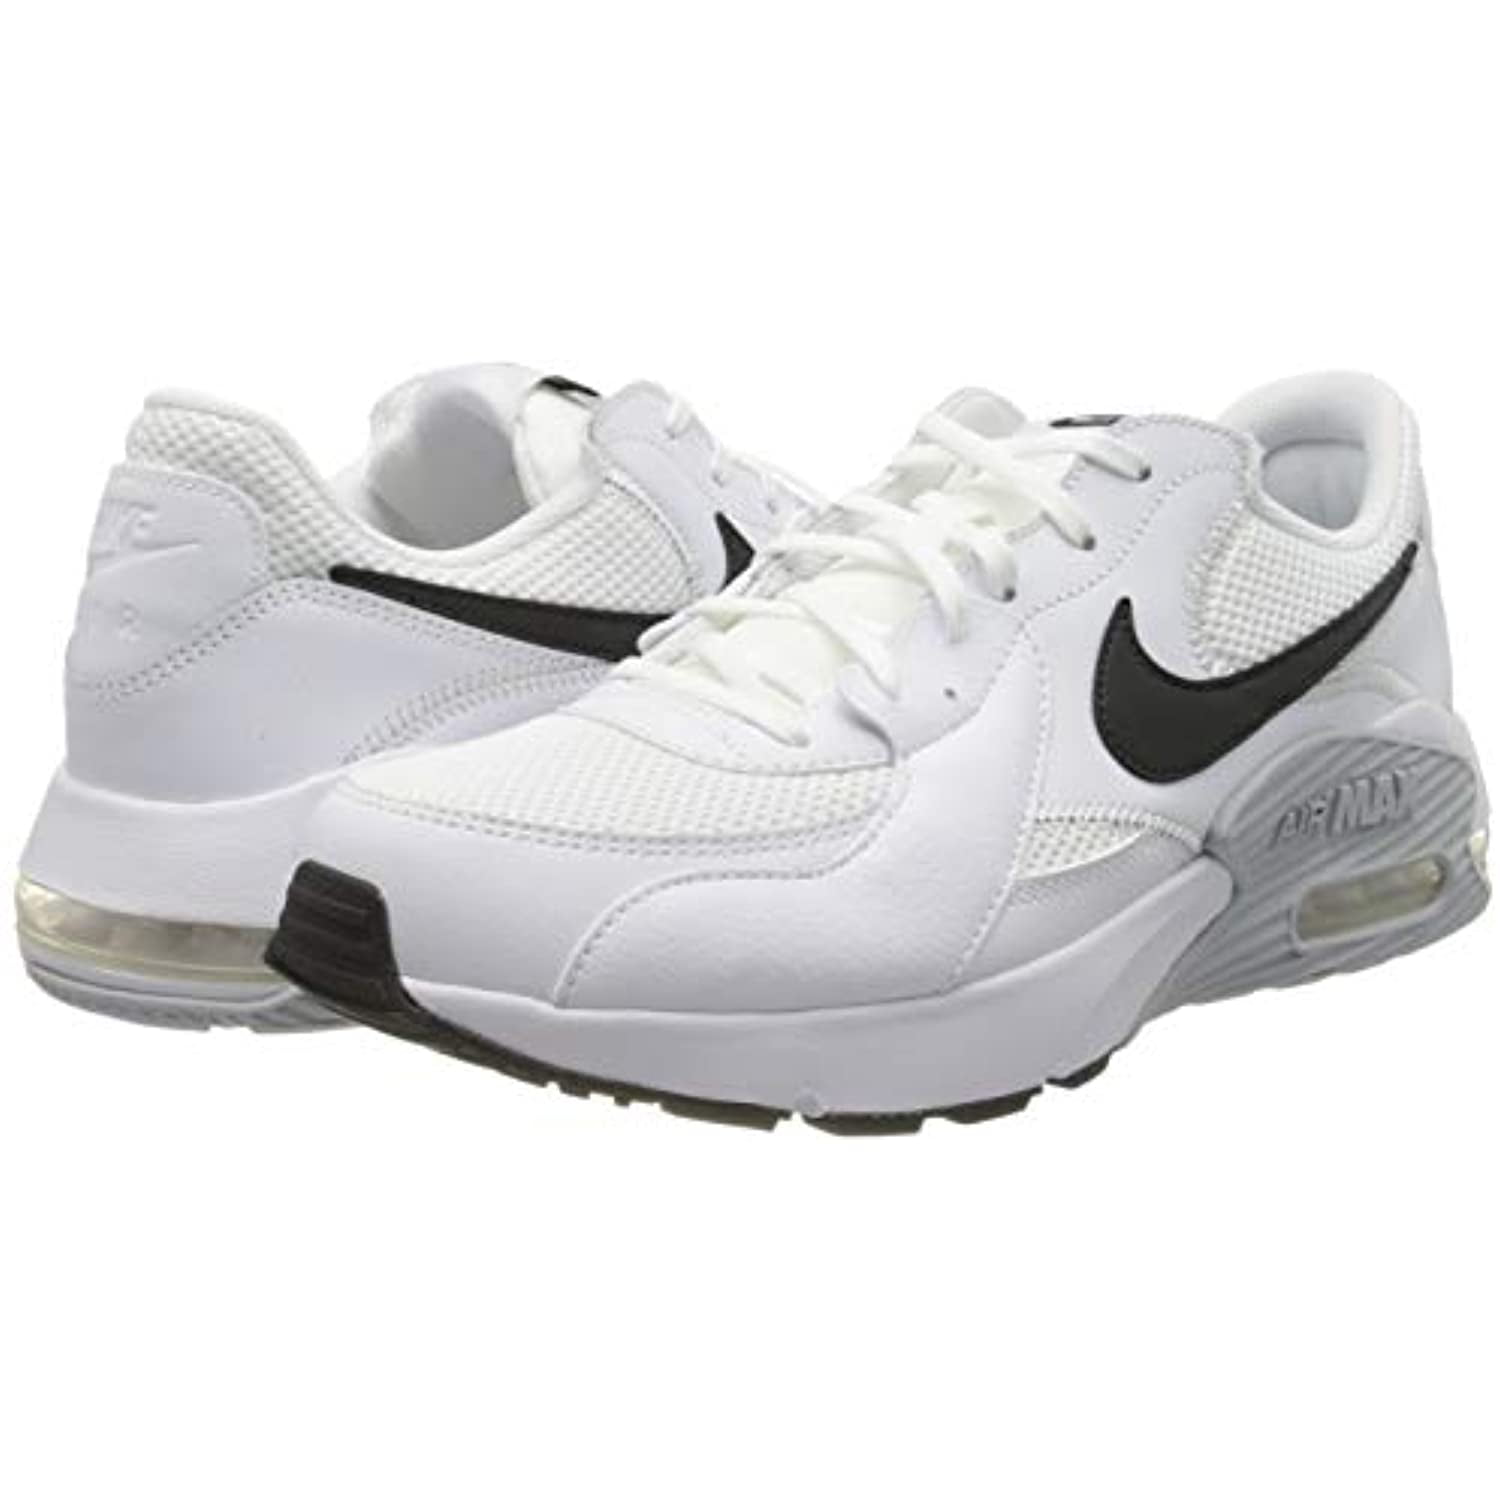 tirano sobrino Perth Blackborough Nike Men's Low-Top Sneakers, White Black Pure Platinum, 8 US - Walmart.com